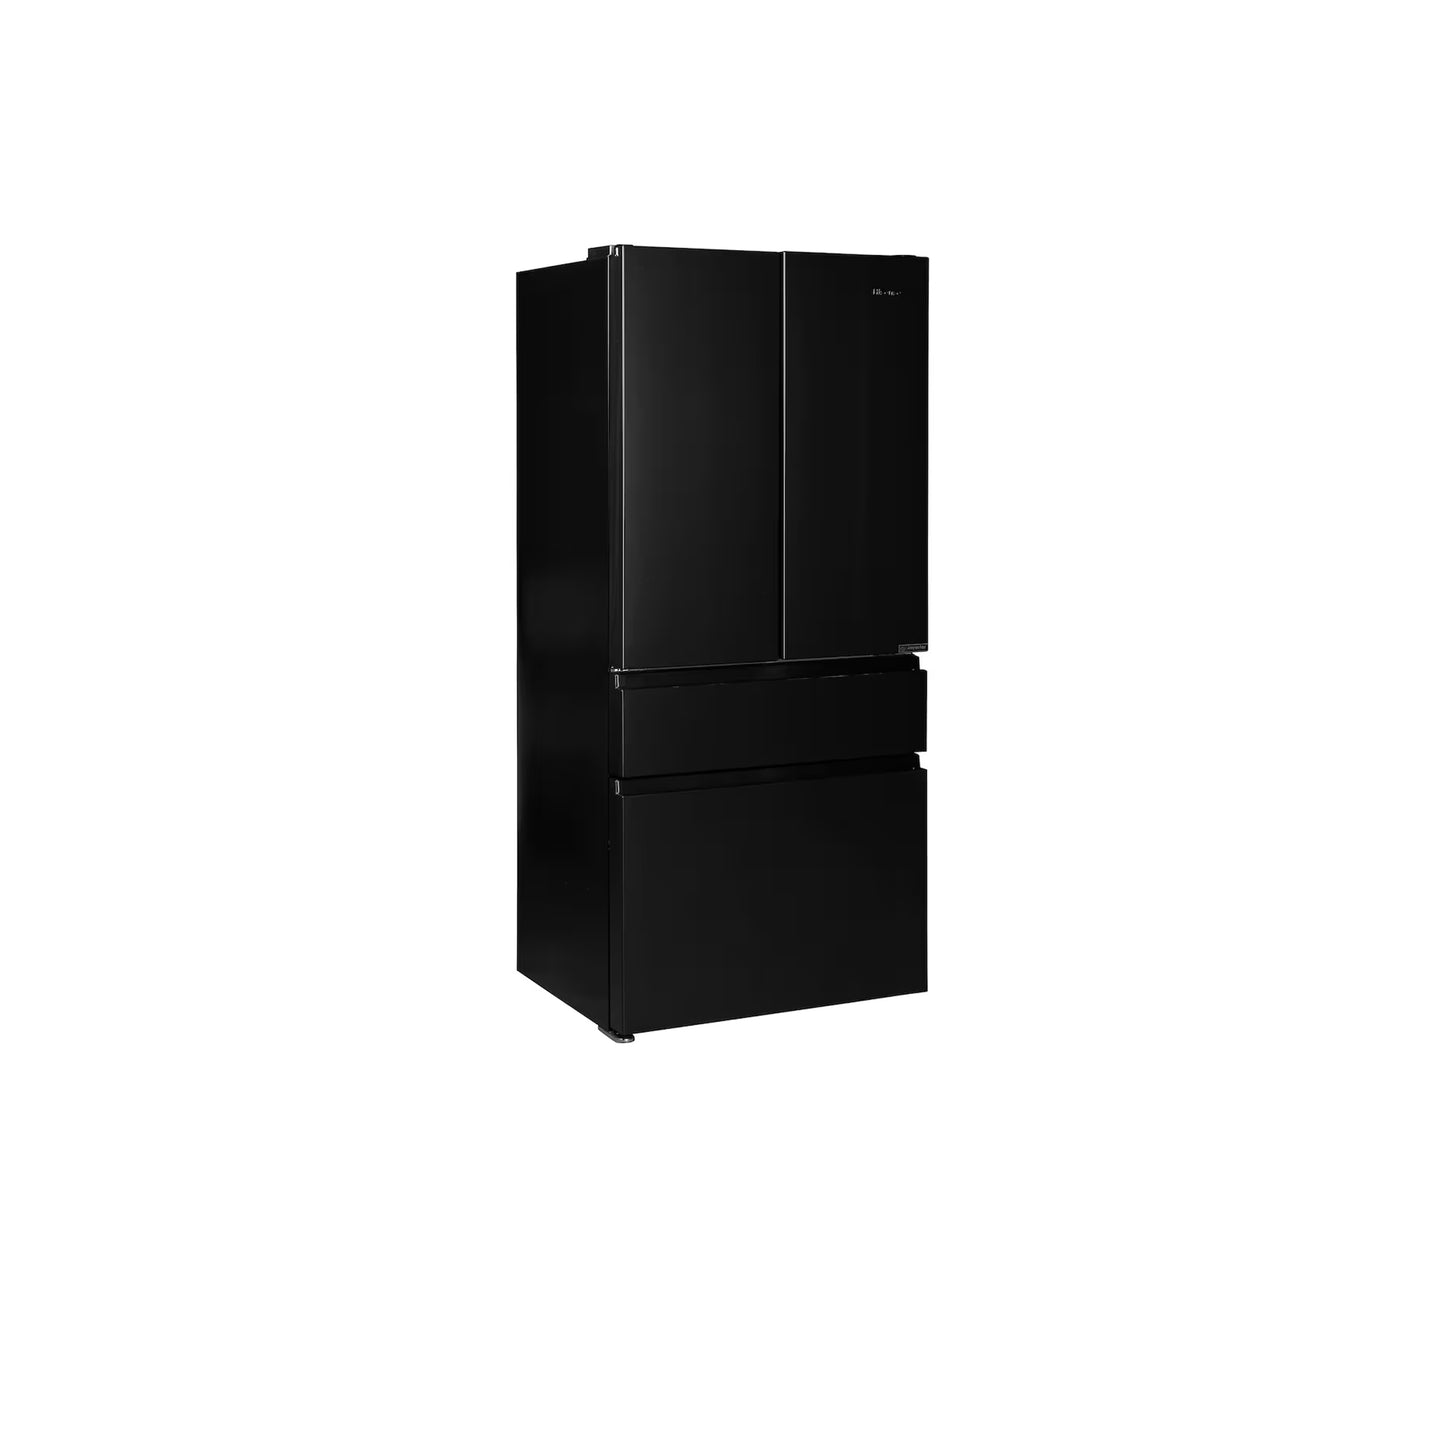 Bespoke 4-Door French Door Refrigerator (23 cu. ft.) with Customizable Door Panel Colors and Beverage Center™ in Black Glass Top Panels with Navy Steel Middle and Bottom Panel.